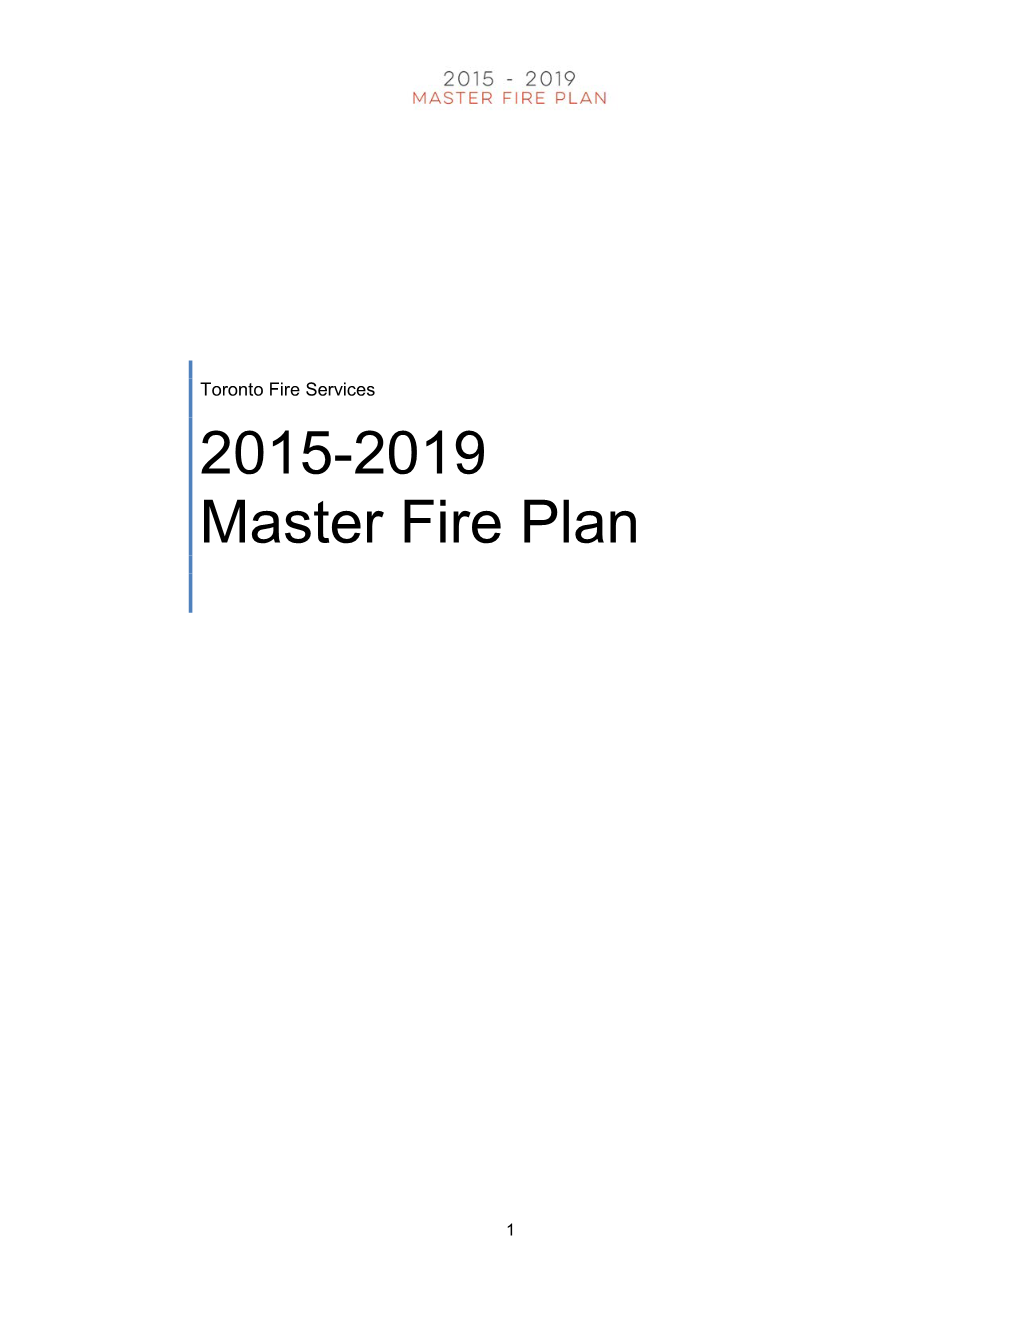 2015-2019 Master Fire Plan